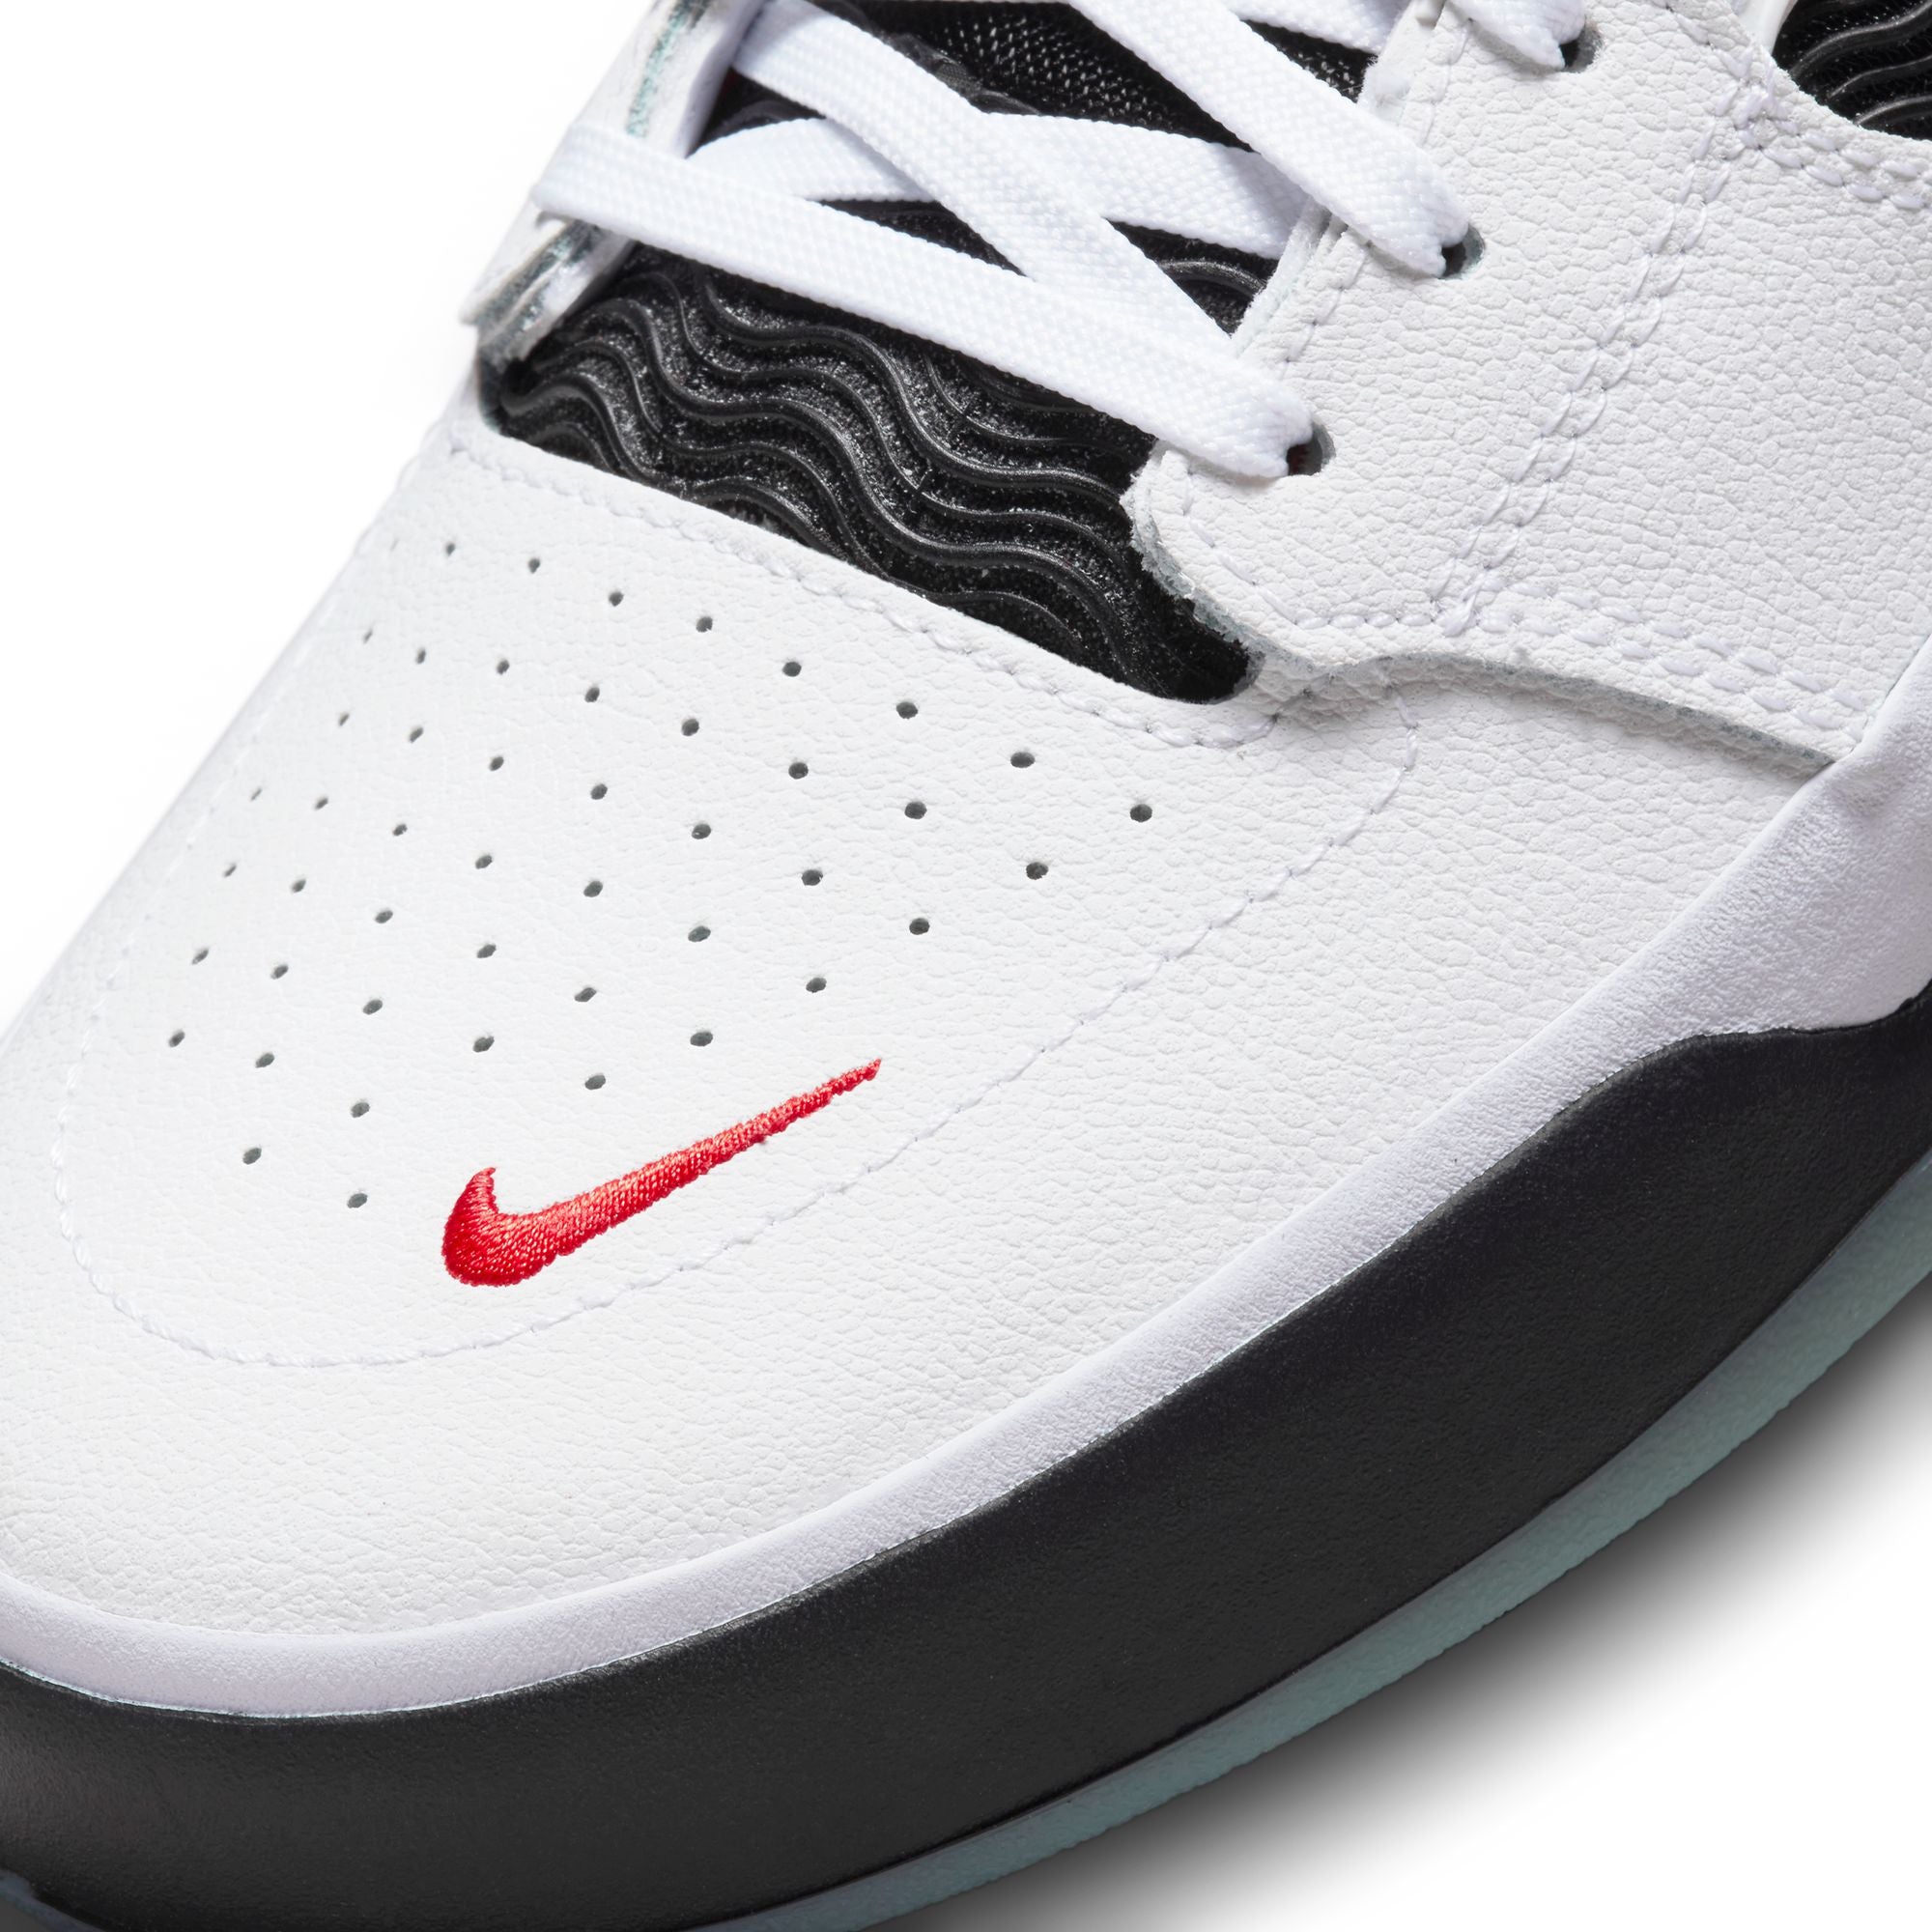 Nike SB Ishod Premium Pro Shoe - White/Black-University Red-Black